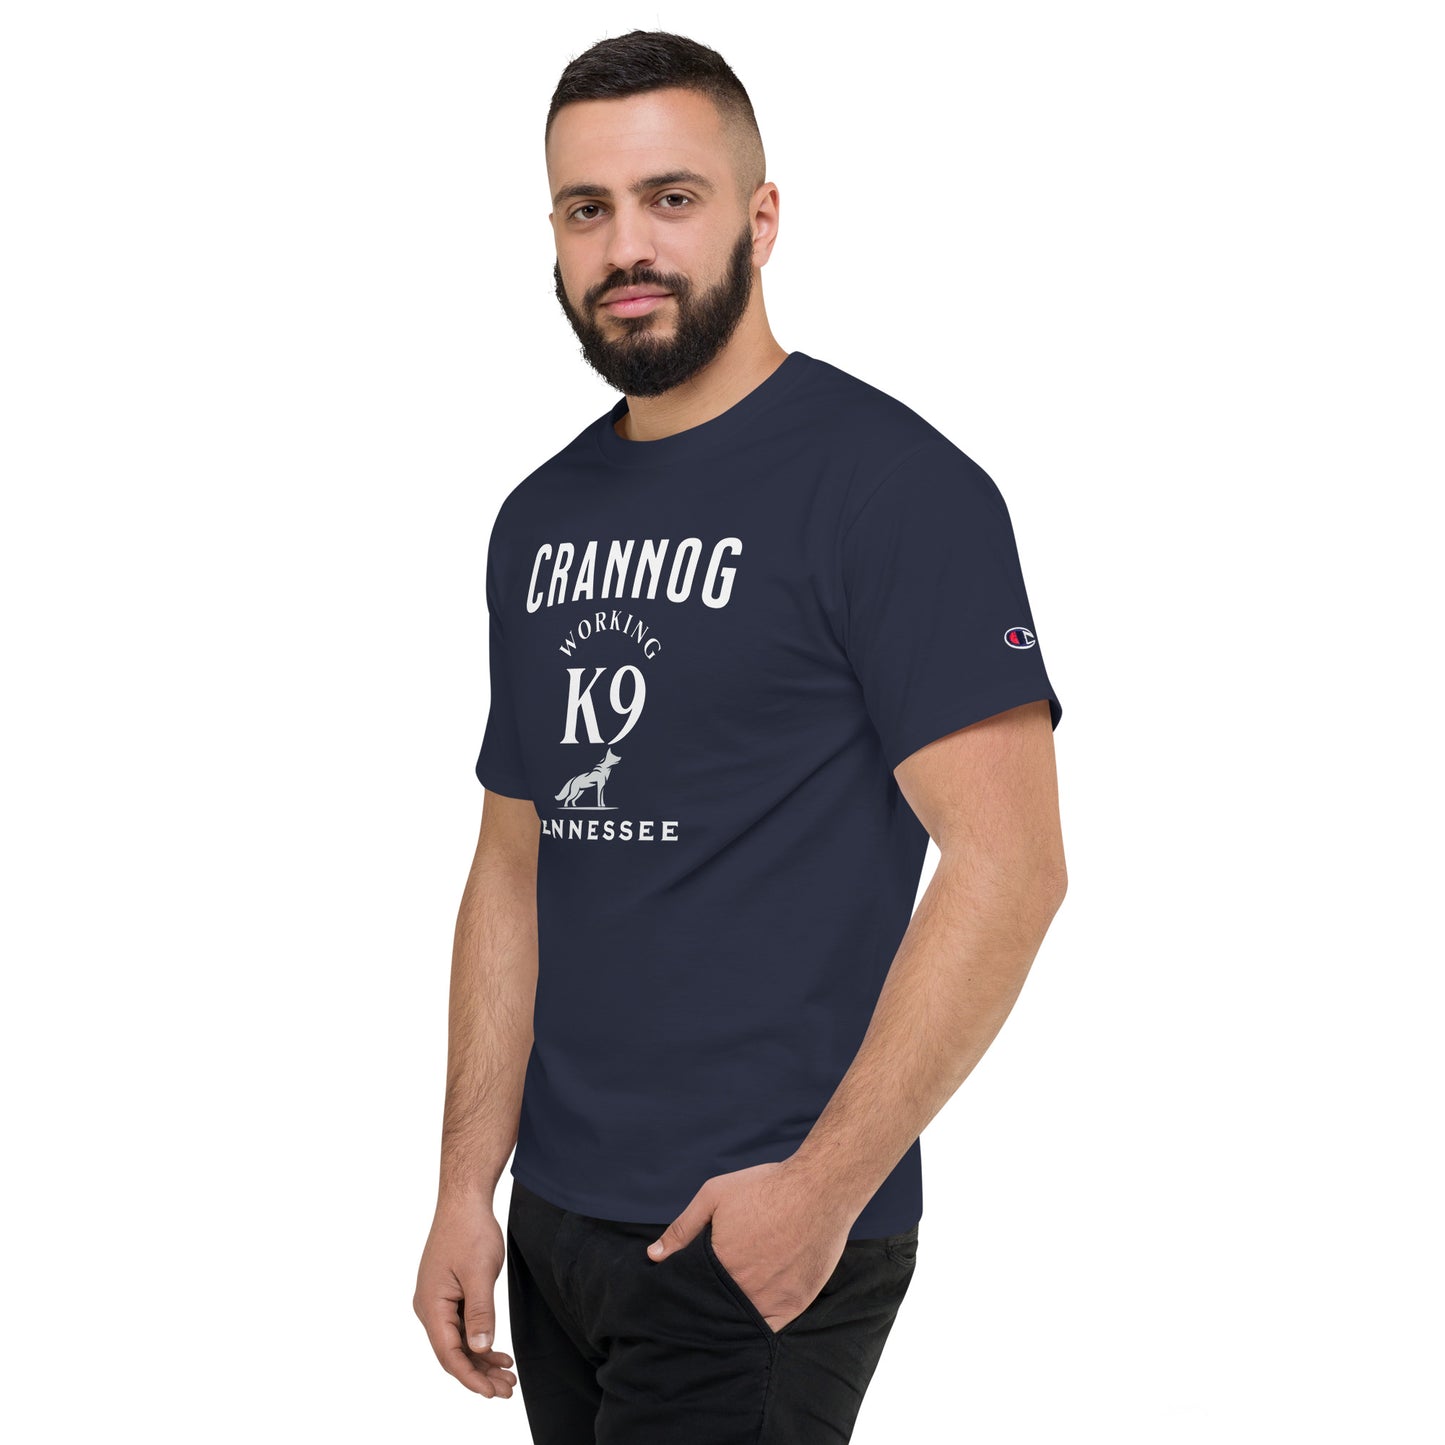 Crannog WK9, Men's Champion T-Shirt